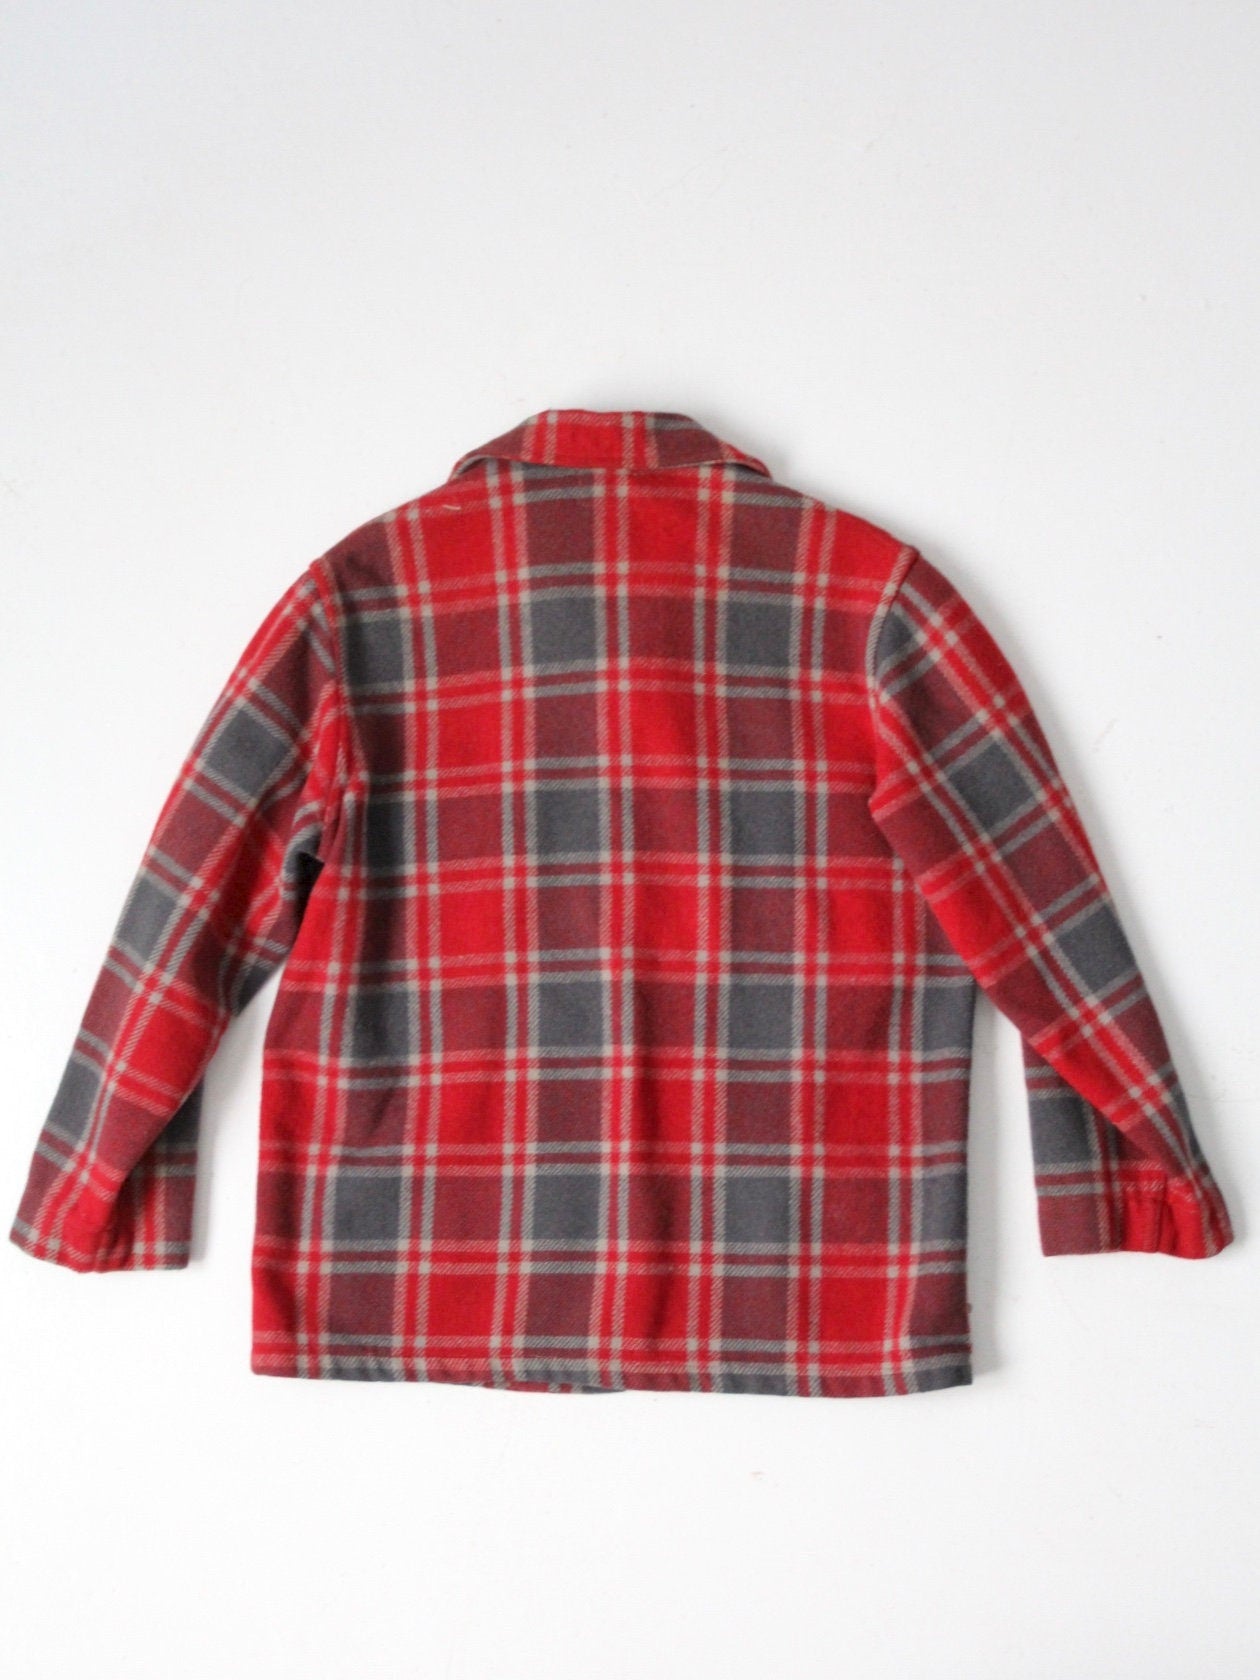 Vintage 50s Wool Mackinaw Hunting Coat Chippewa Jacket by